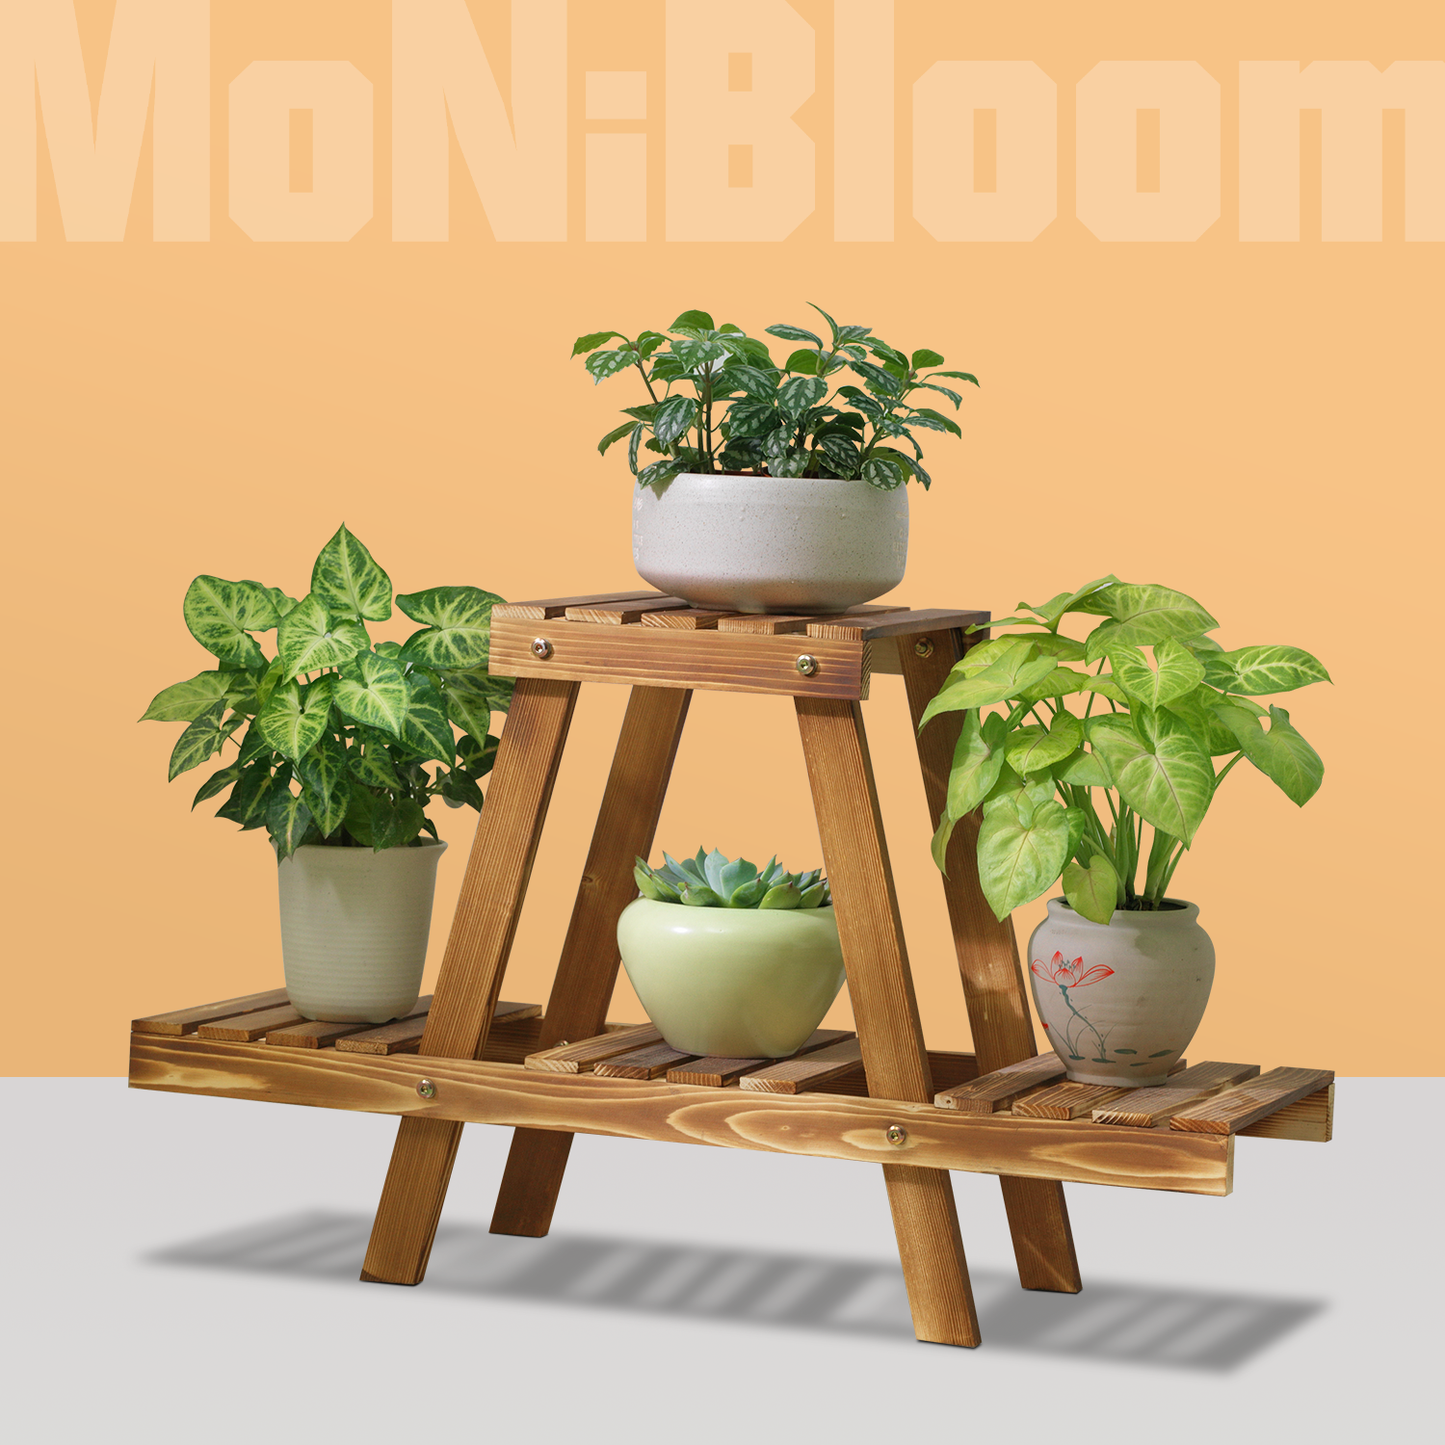 Garden Flower Plant Display Shelf - "A" Scale Style - Carbonized